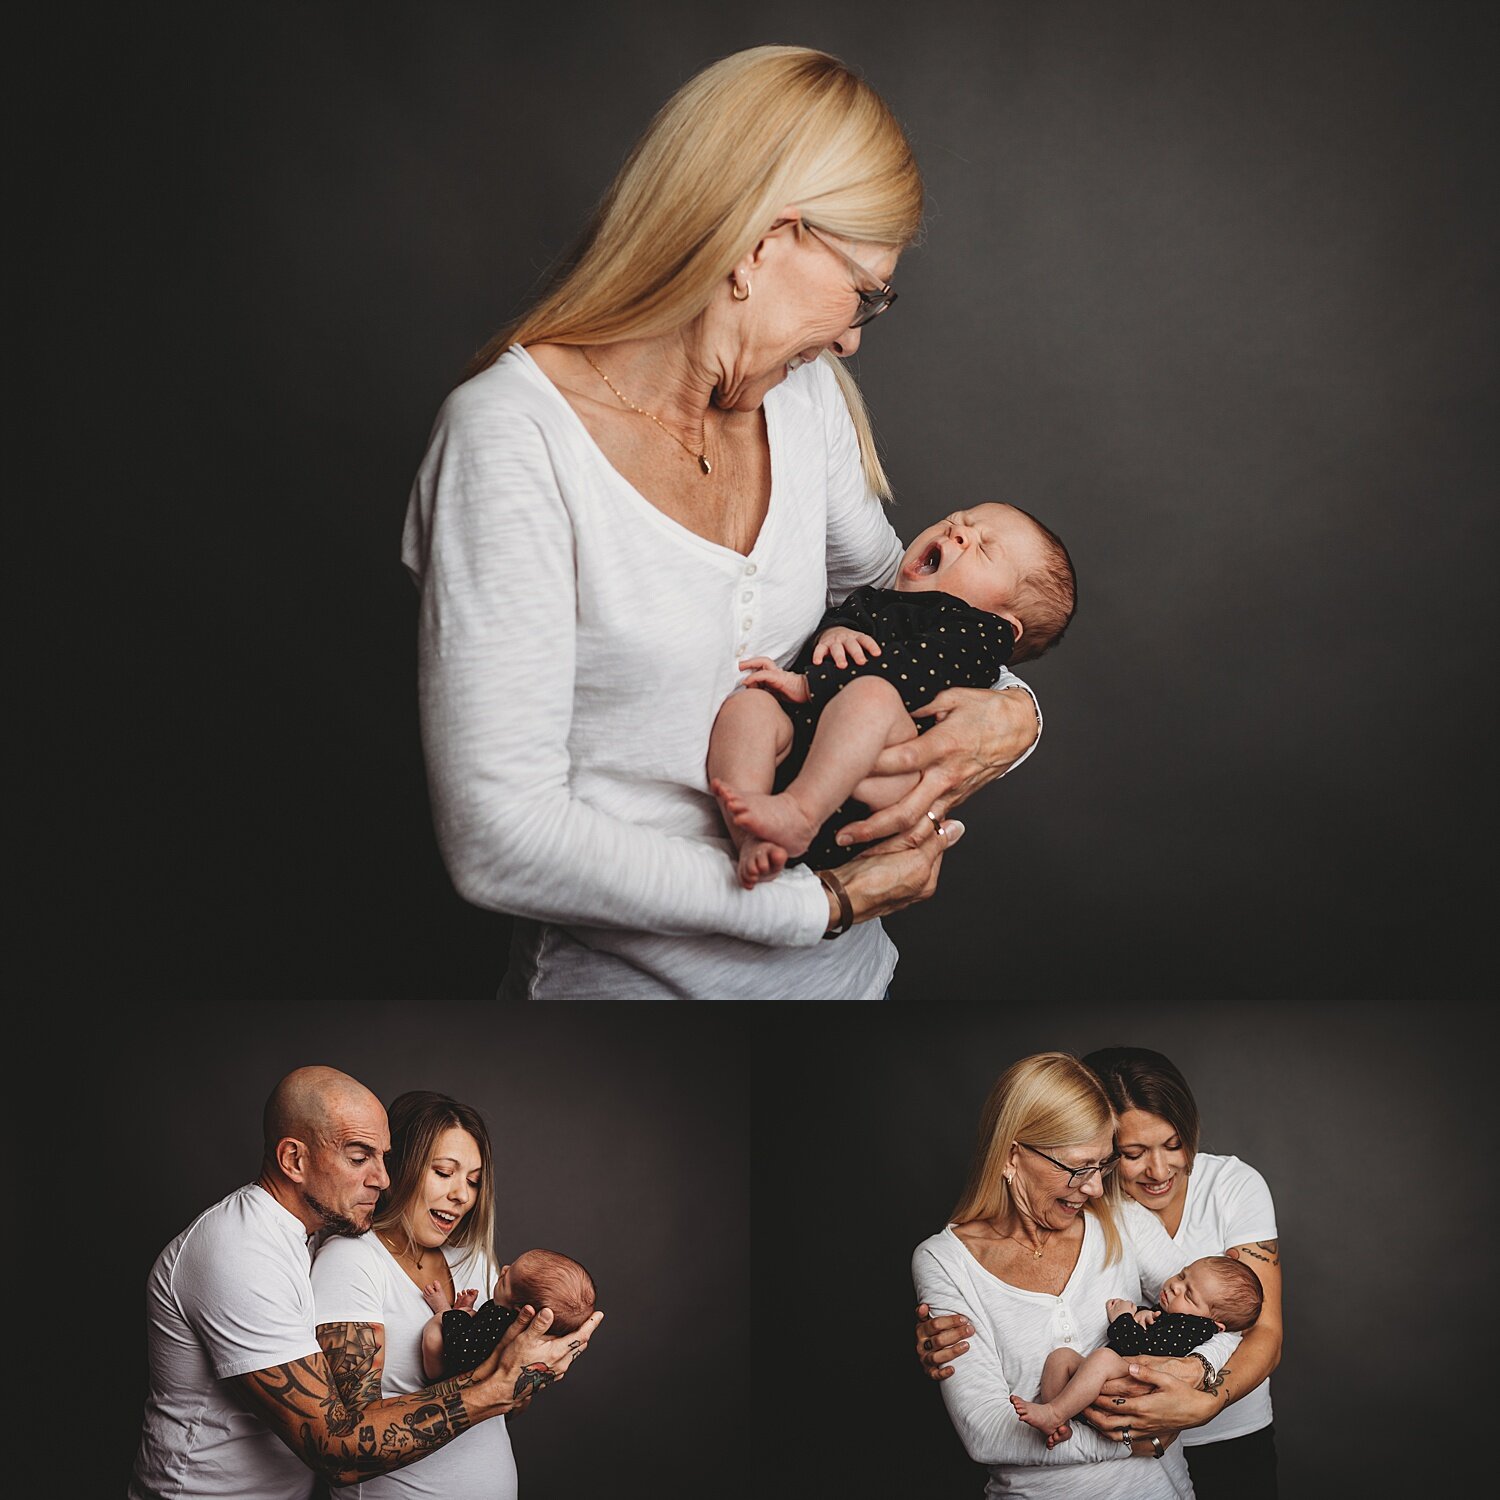 Berks County Pennsylvania studio lifestyle newborn family photographer